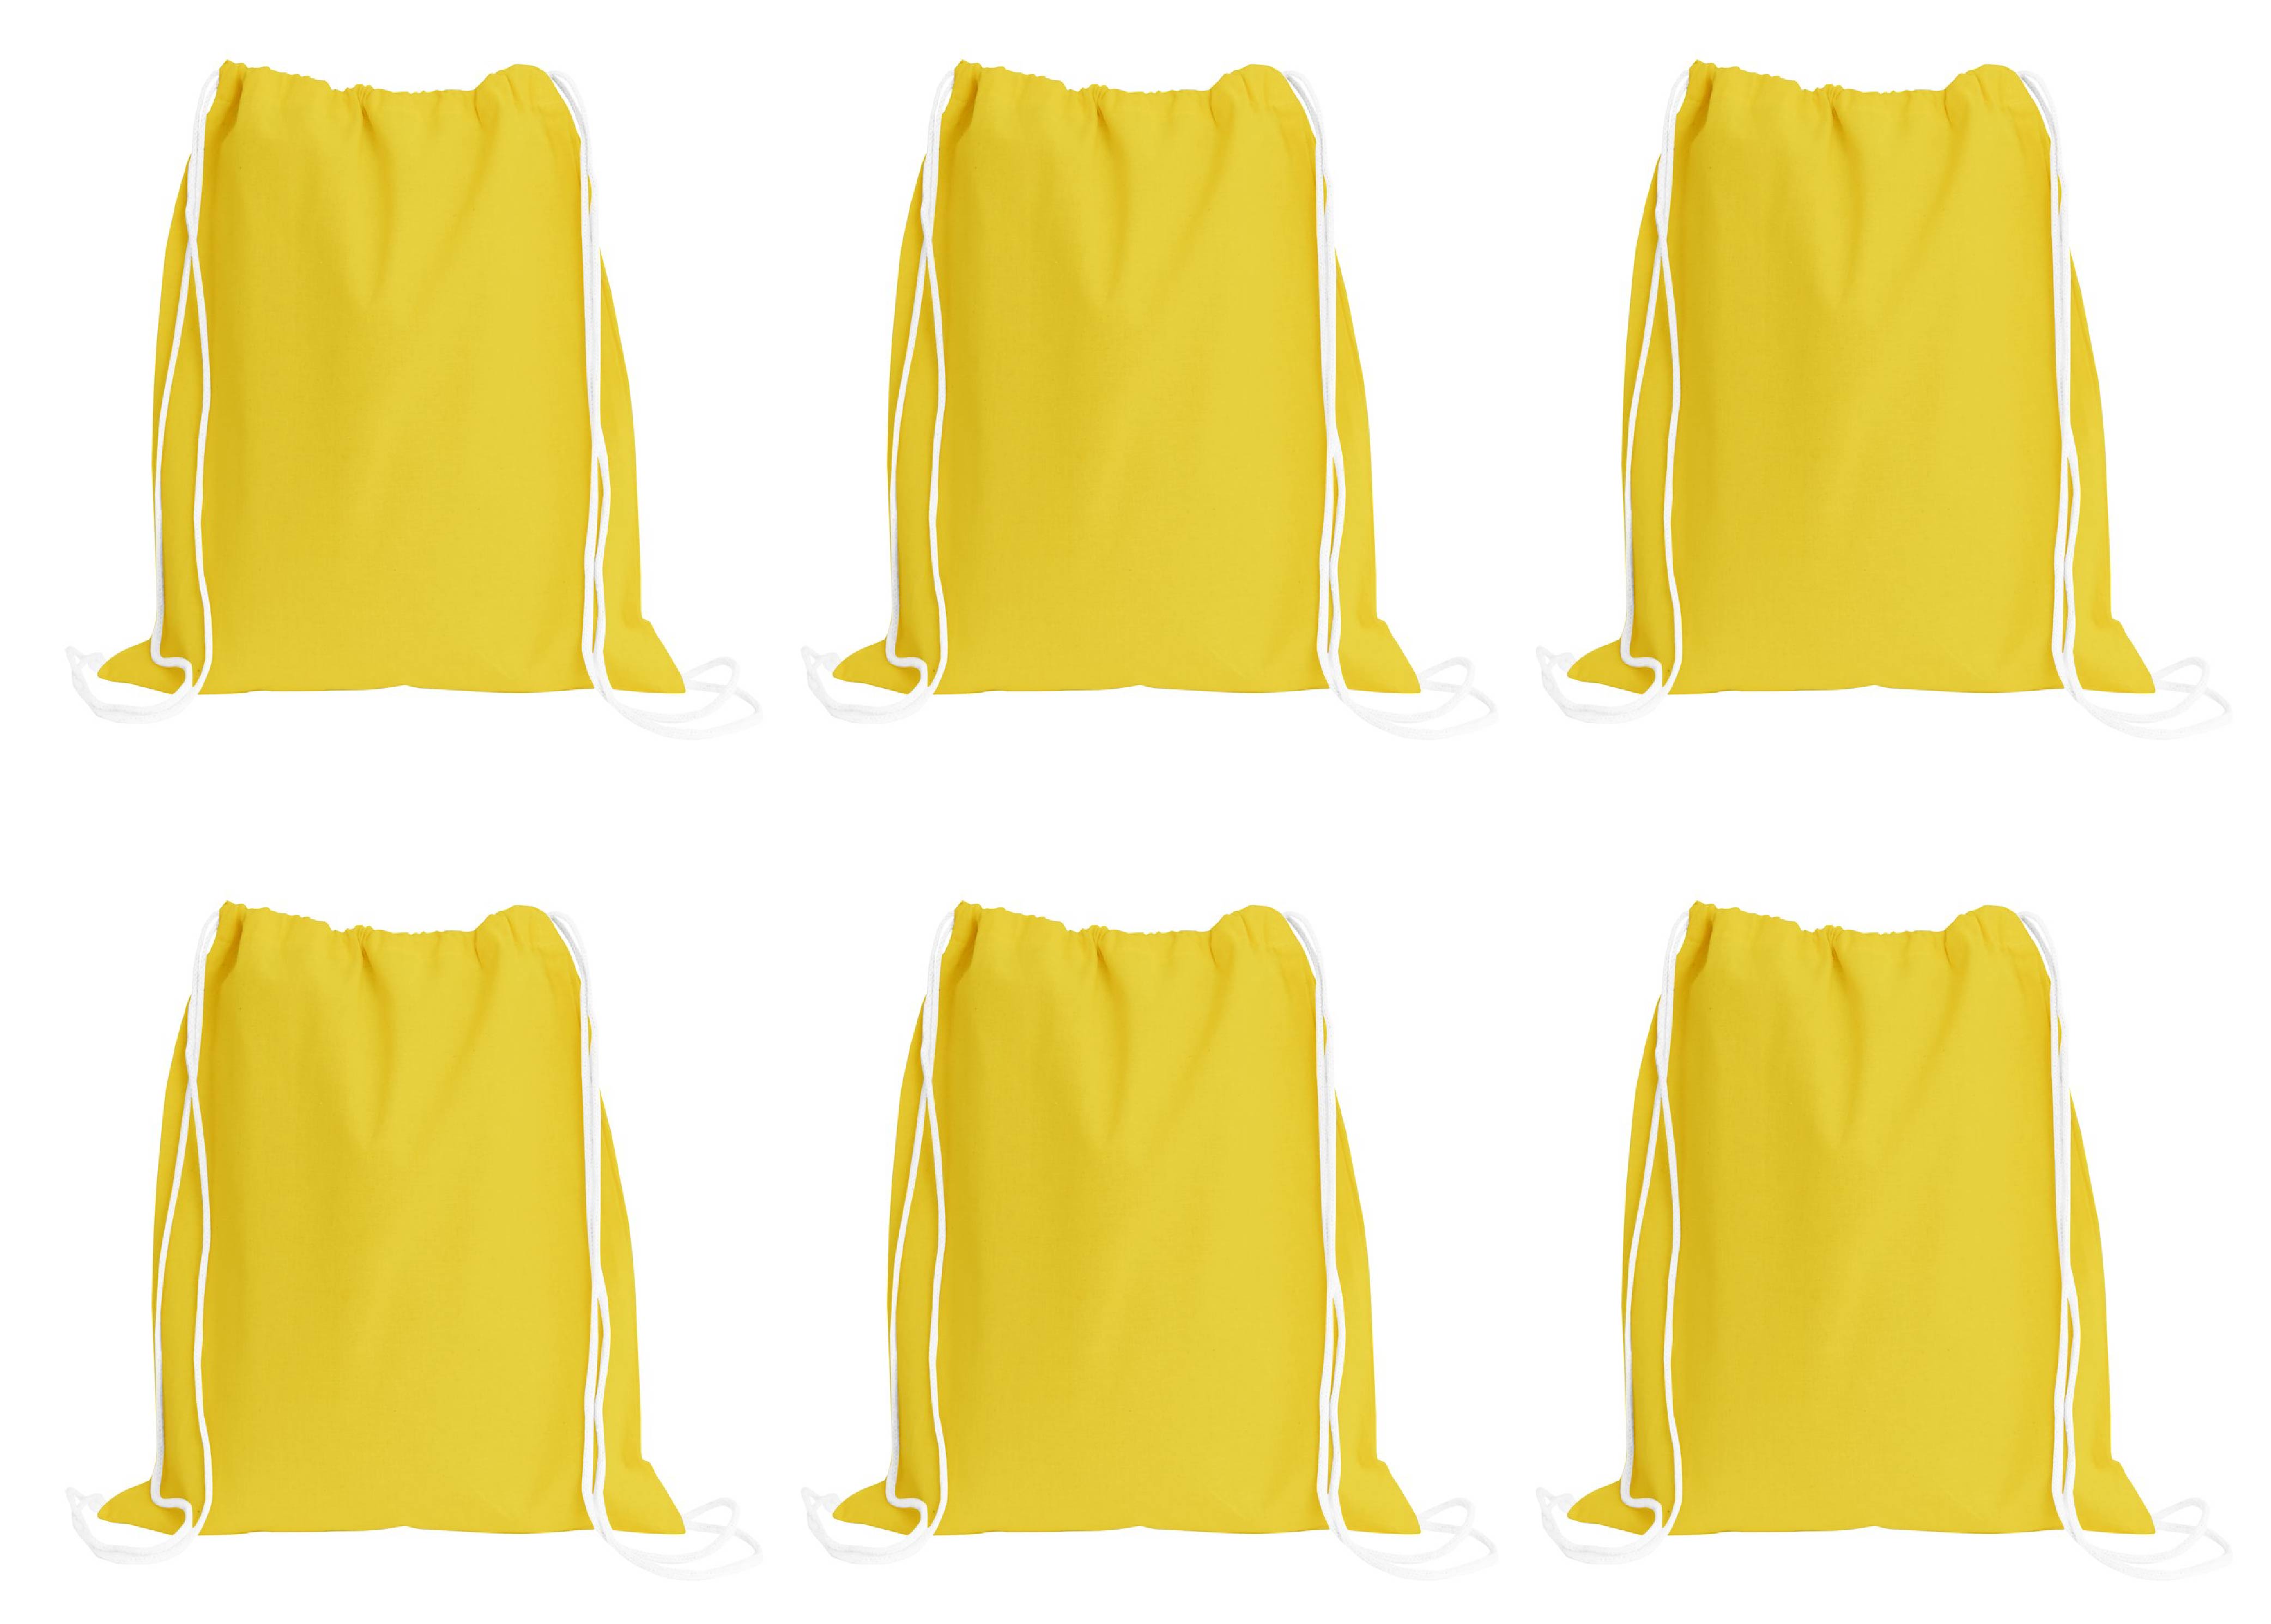 Sport Drawstring Bag, 100% Cotton, Yellow Color